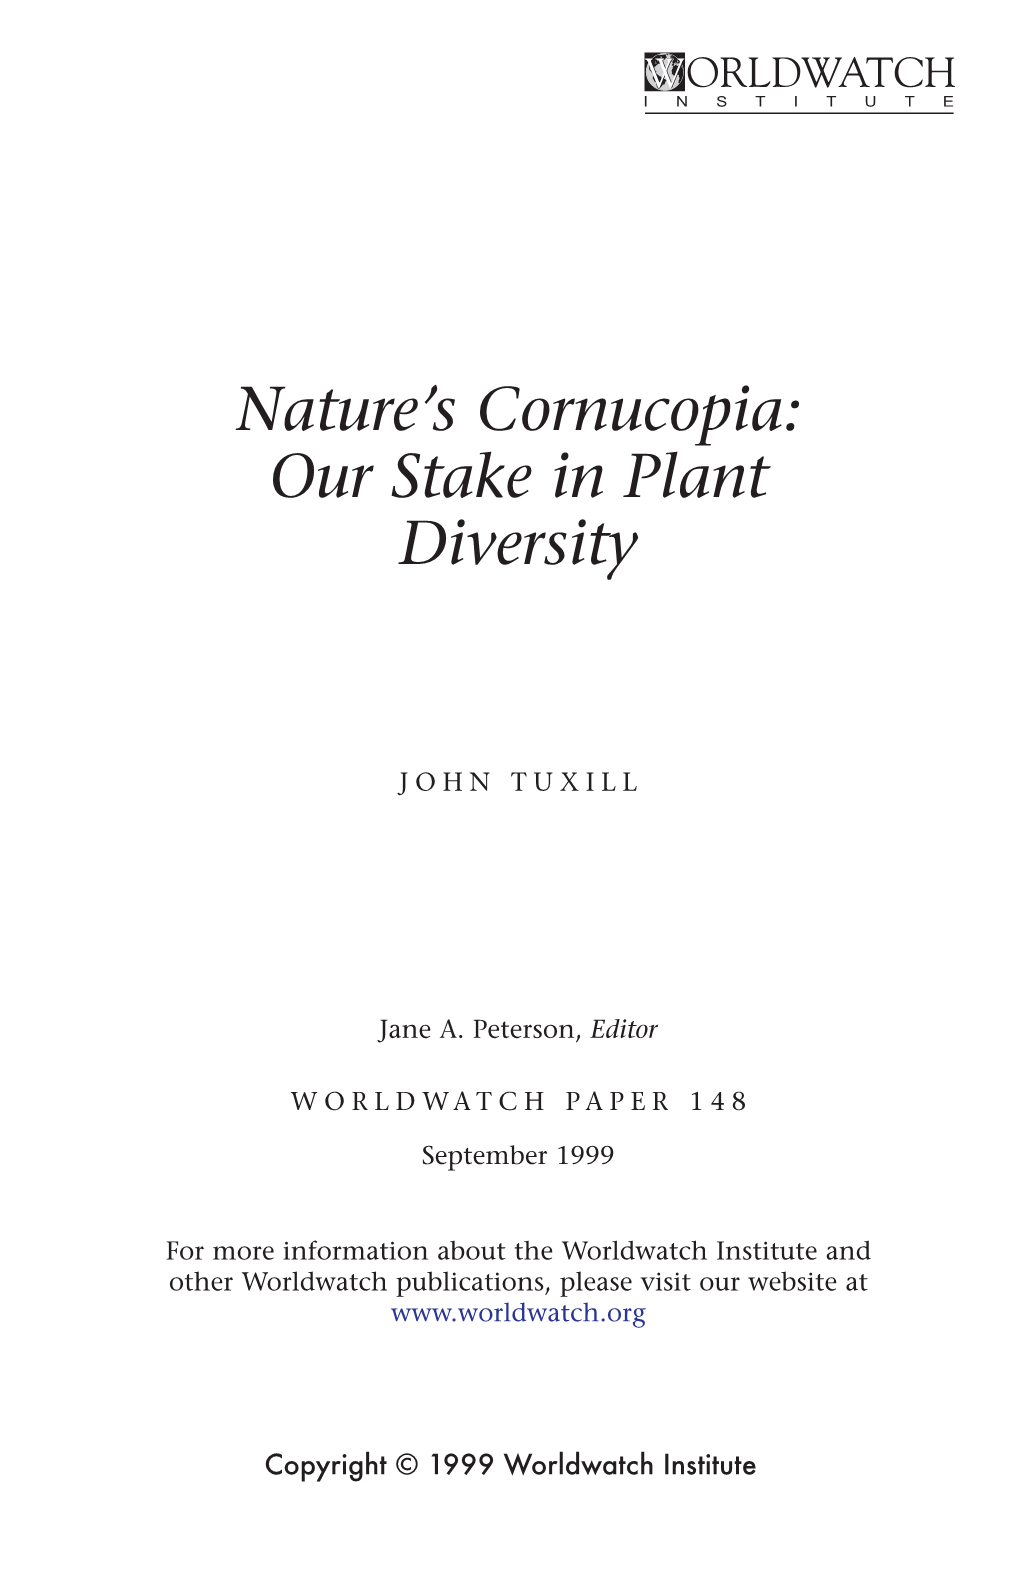 Nature's Cornucopia: Our Stake in Plant Diversity